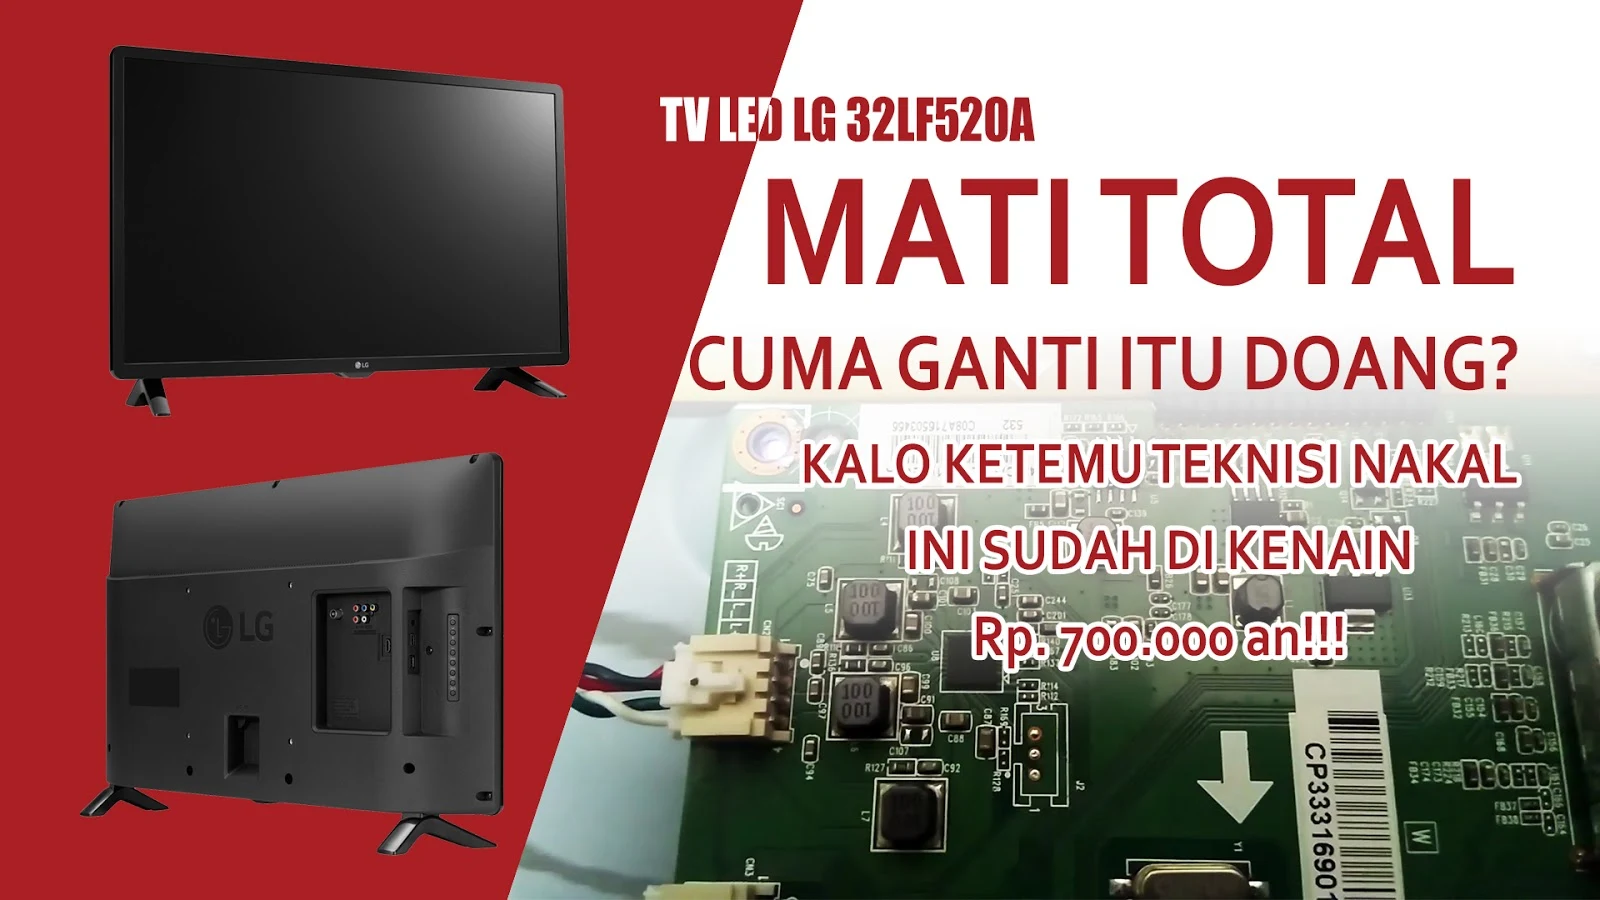 Cara Memperbaiki TV LED LG 32LF520A Mati Total